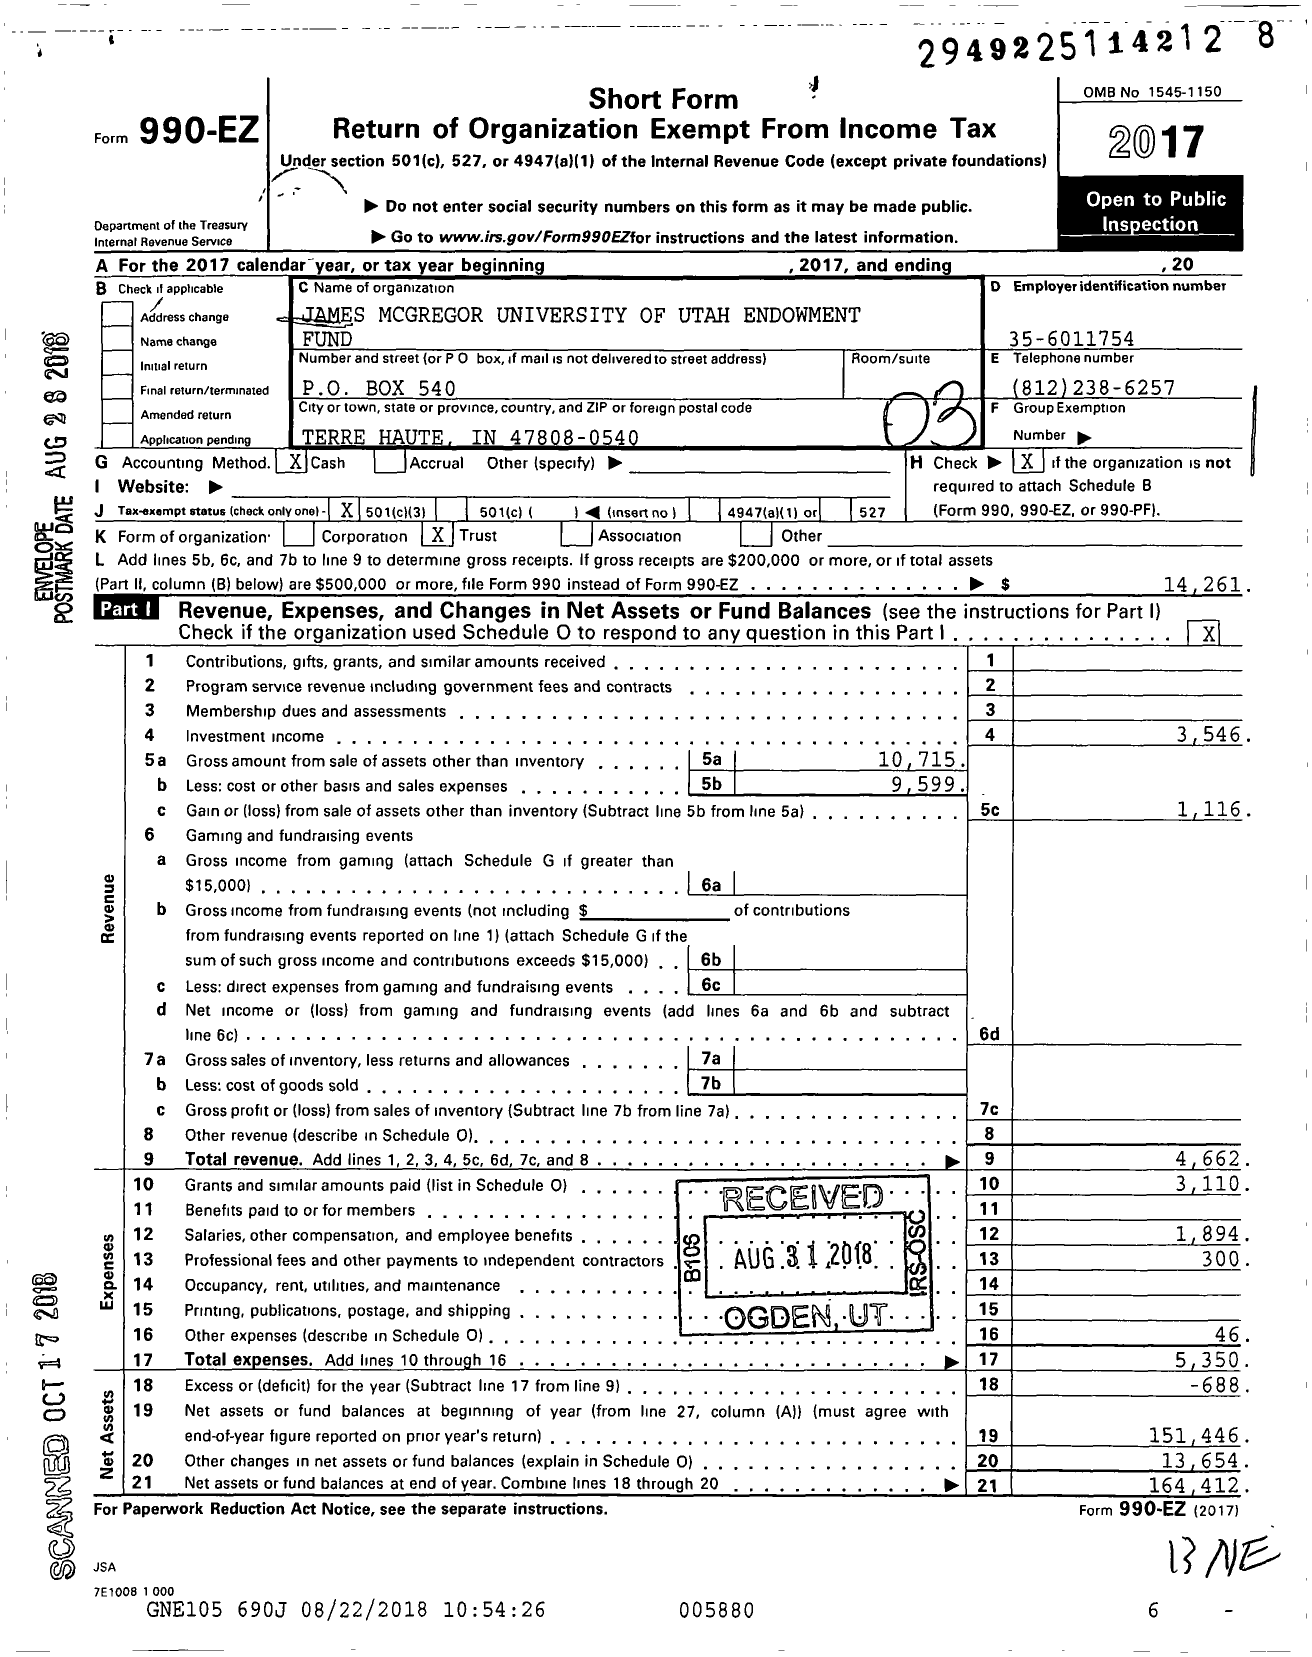 Image of first page of 2017 Form 990EZ for James McGregor University of Utah Endowment Fund